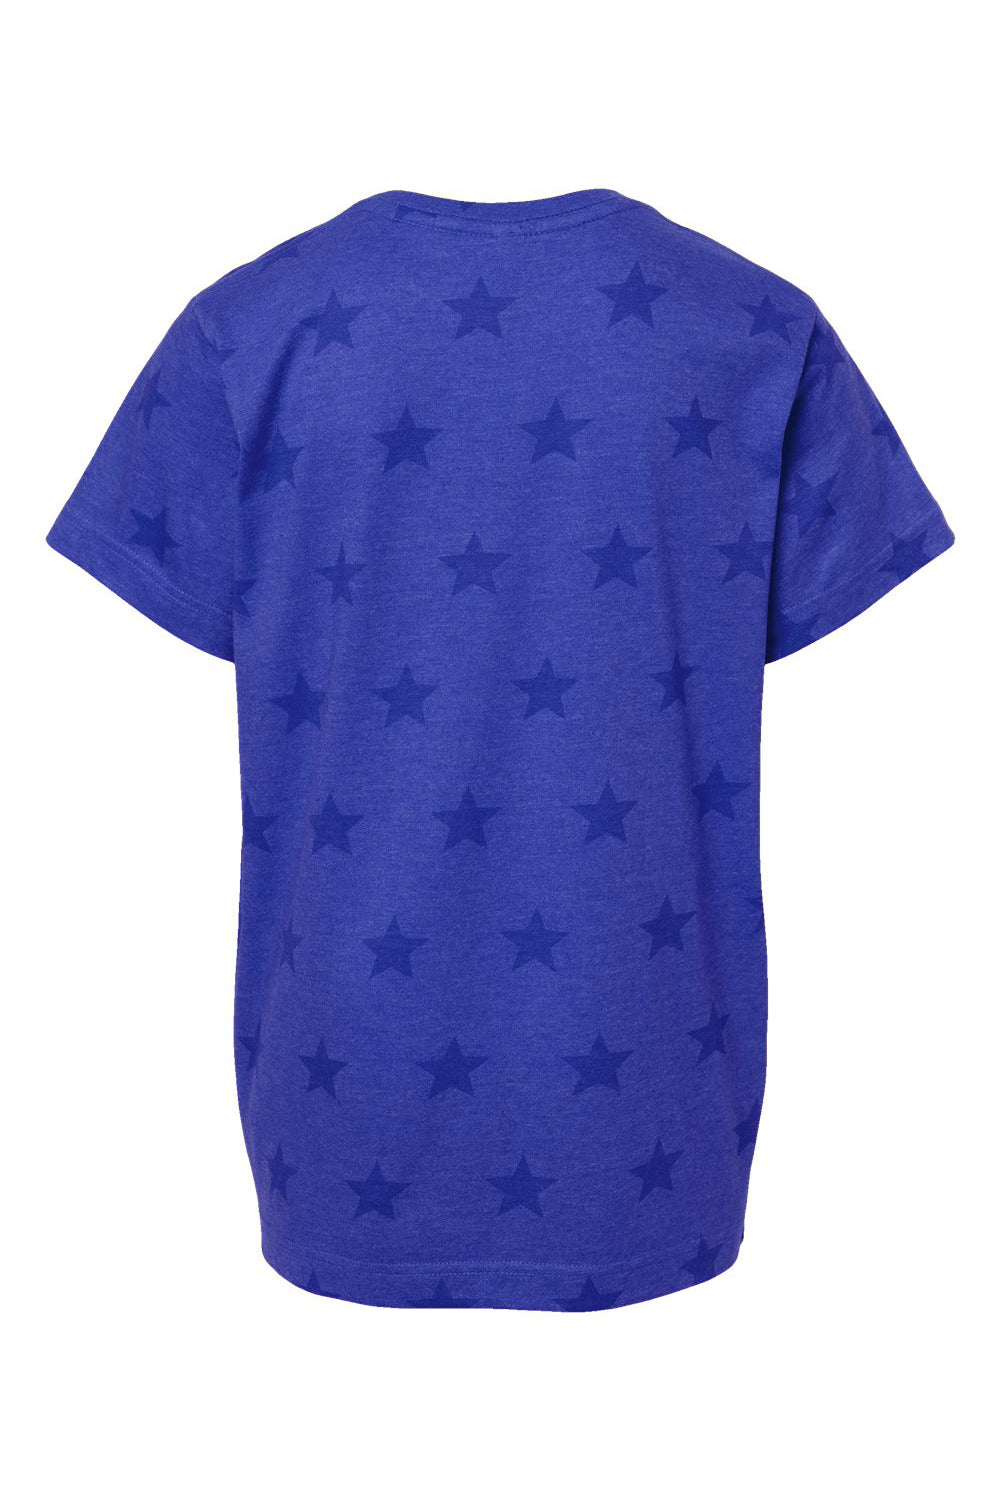 Code Five 2229 Youth Star Print Short Sleeve Crewneck T-Shirt Royal Blue Flat Back